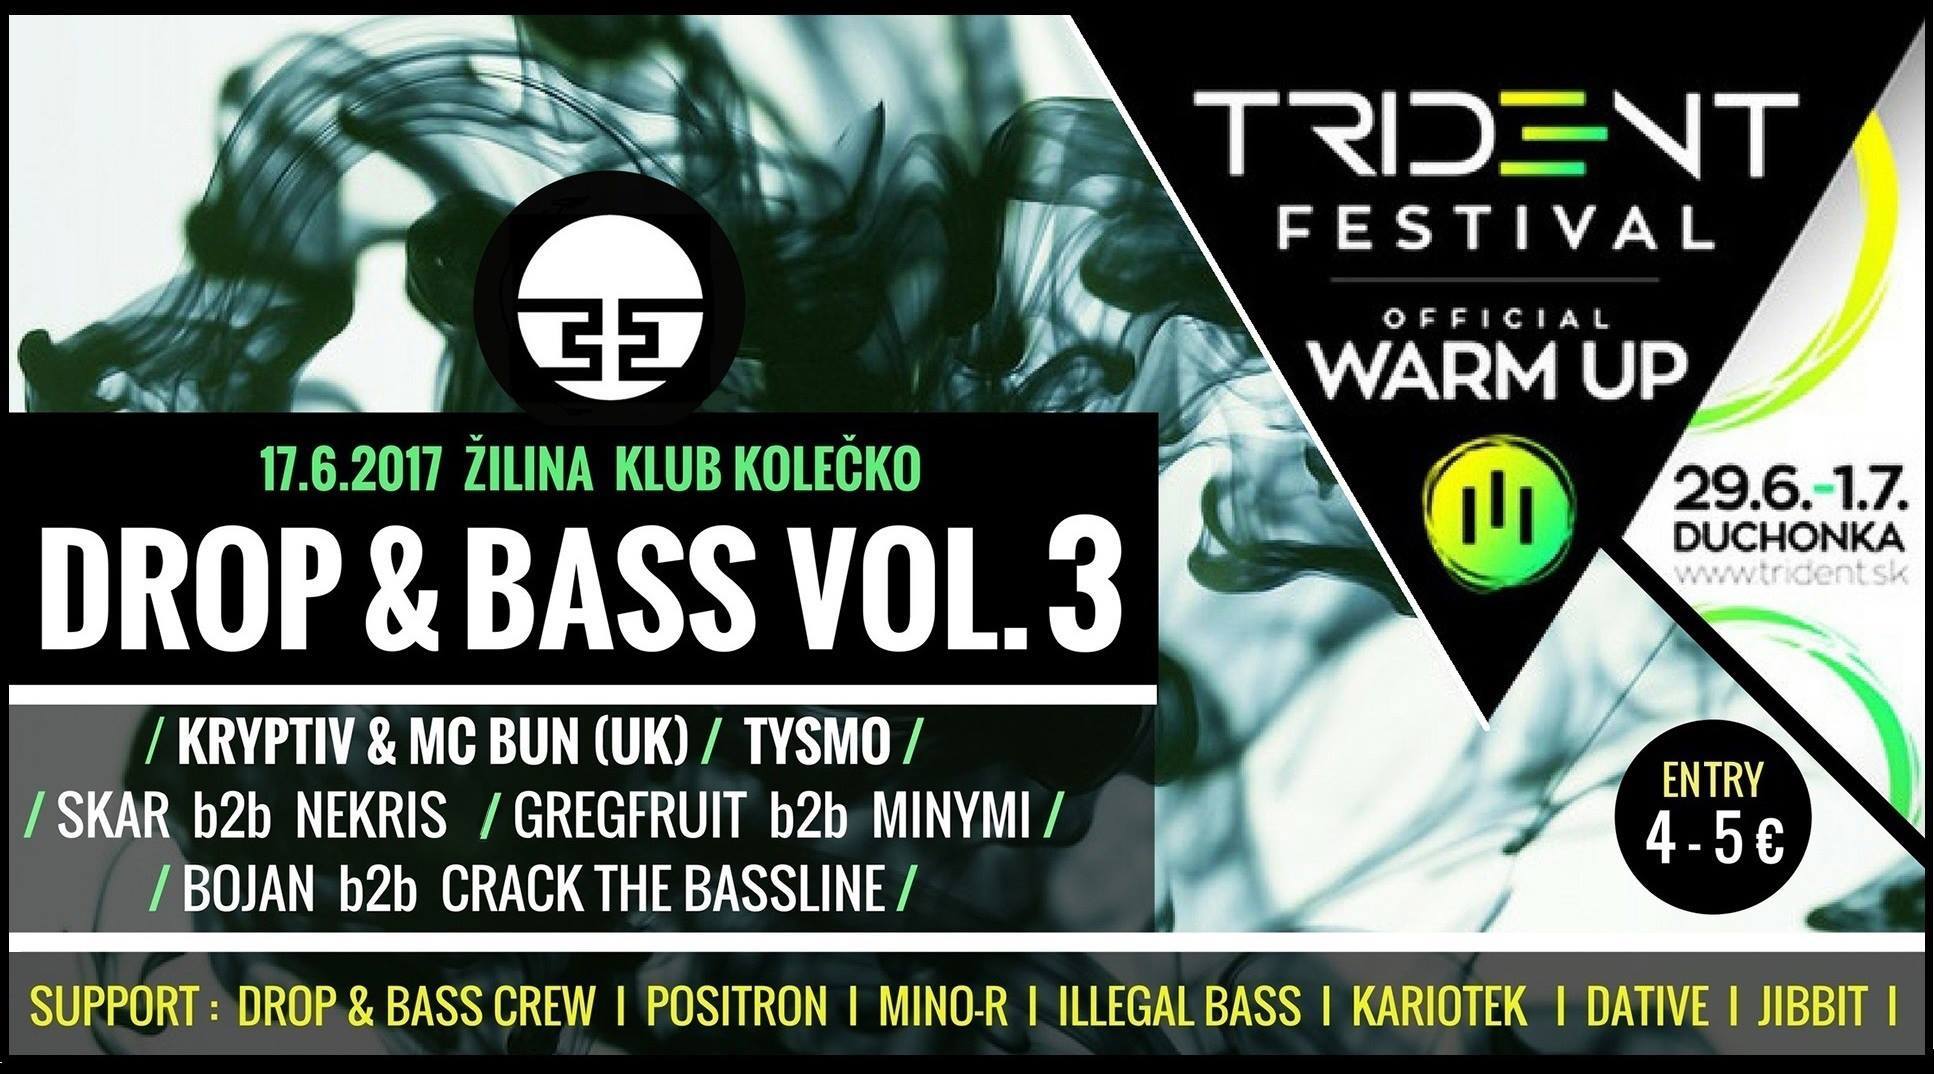 Drop & Bass vol.3 w. Kryptiv /Official Trident Festival warm up/